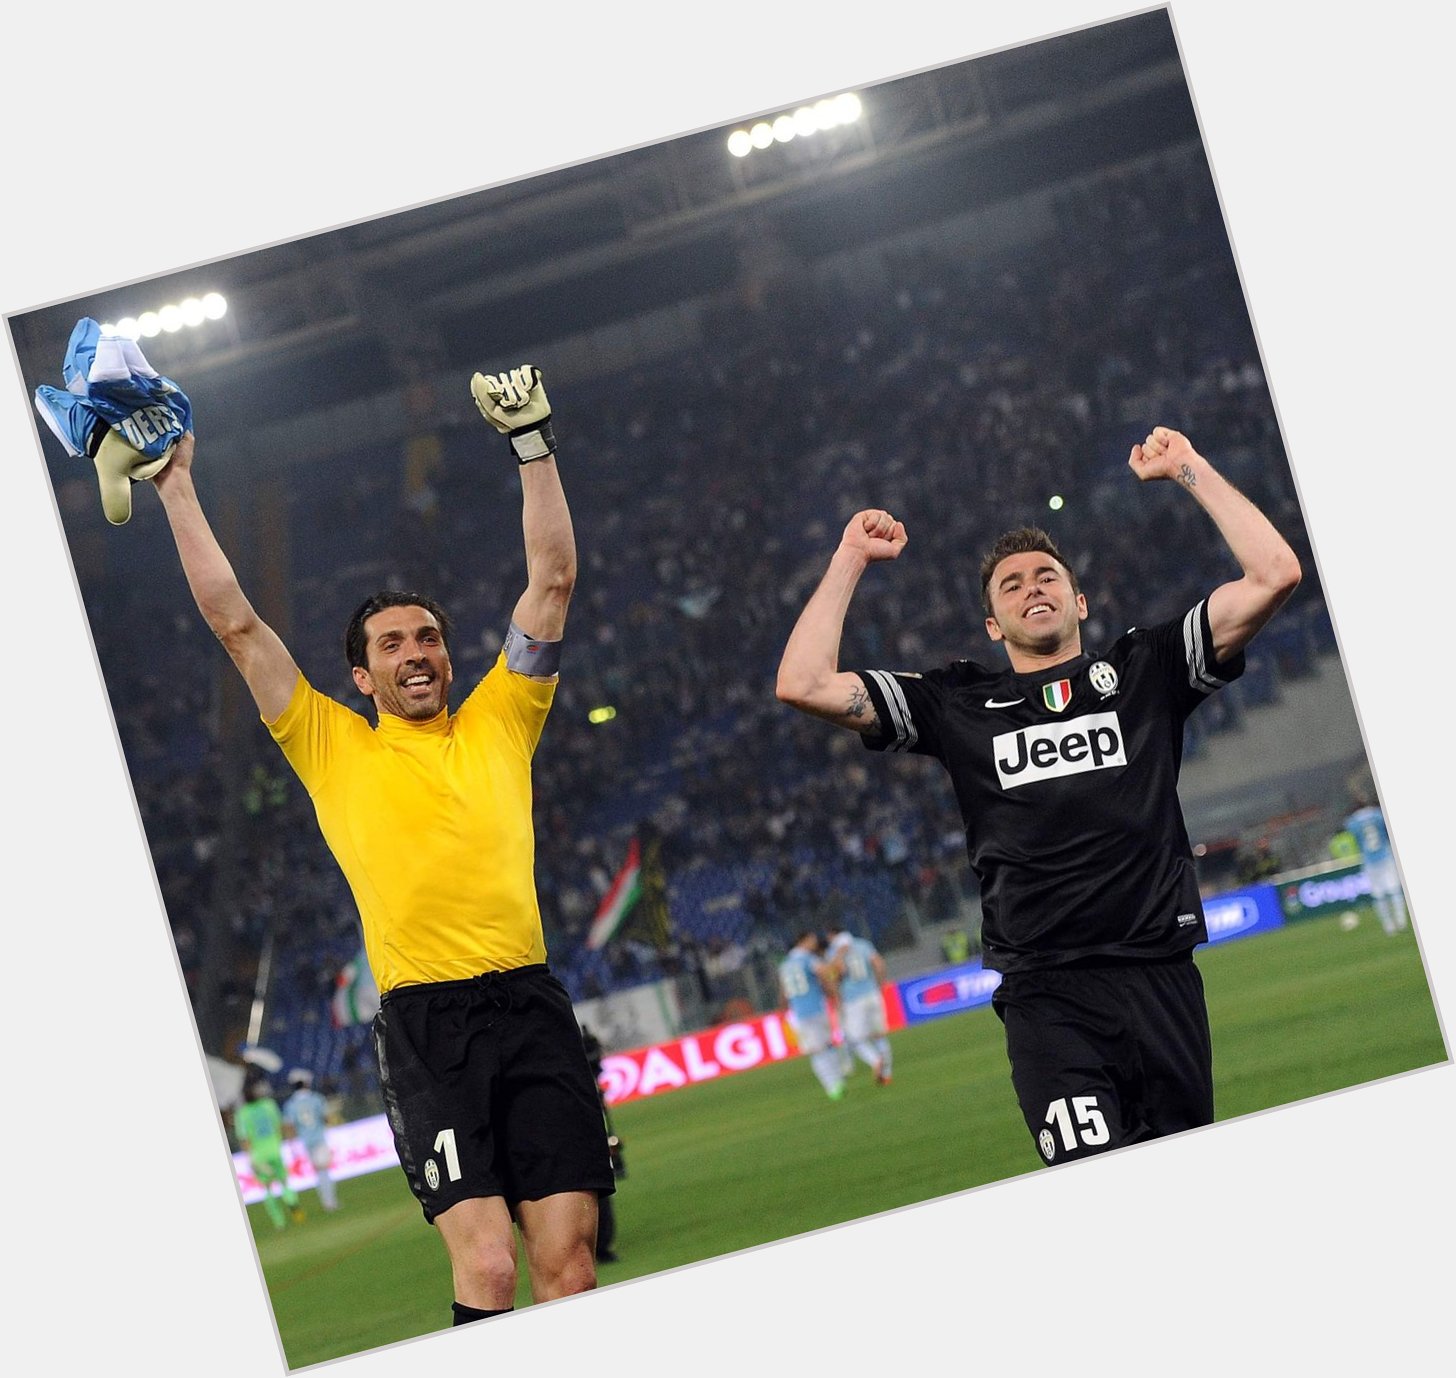 Happy Birthday to Juventus rock Andrea Barzagli Bundesliga x 1 
Serie A x 5
World Cup x 1 